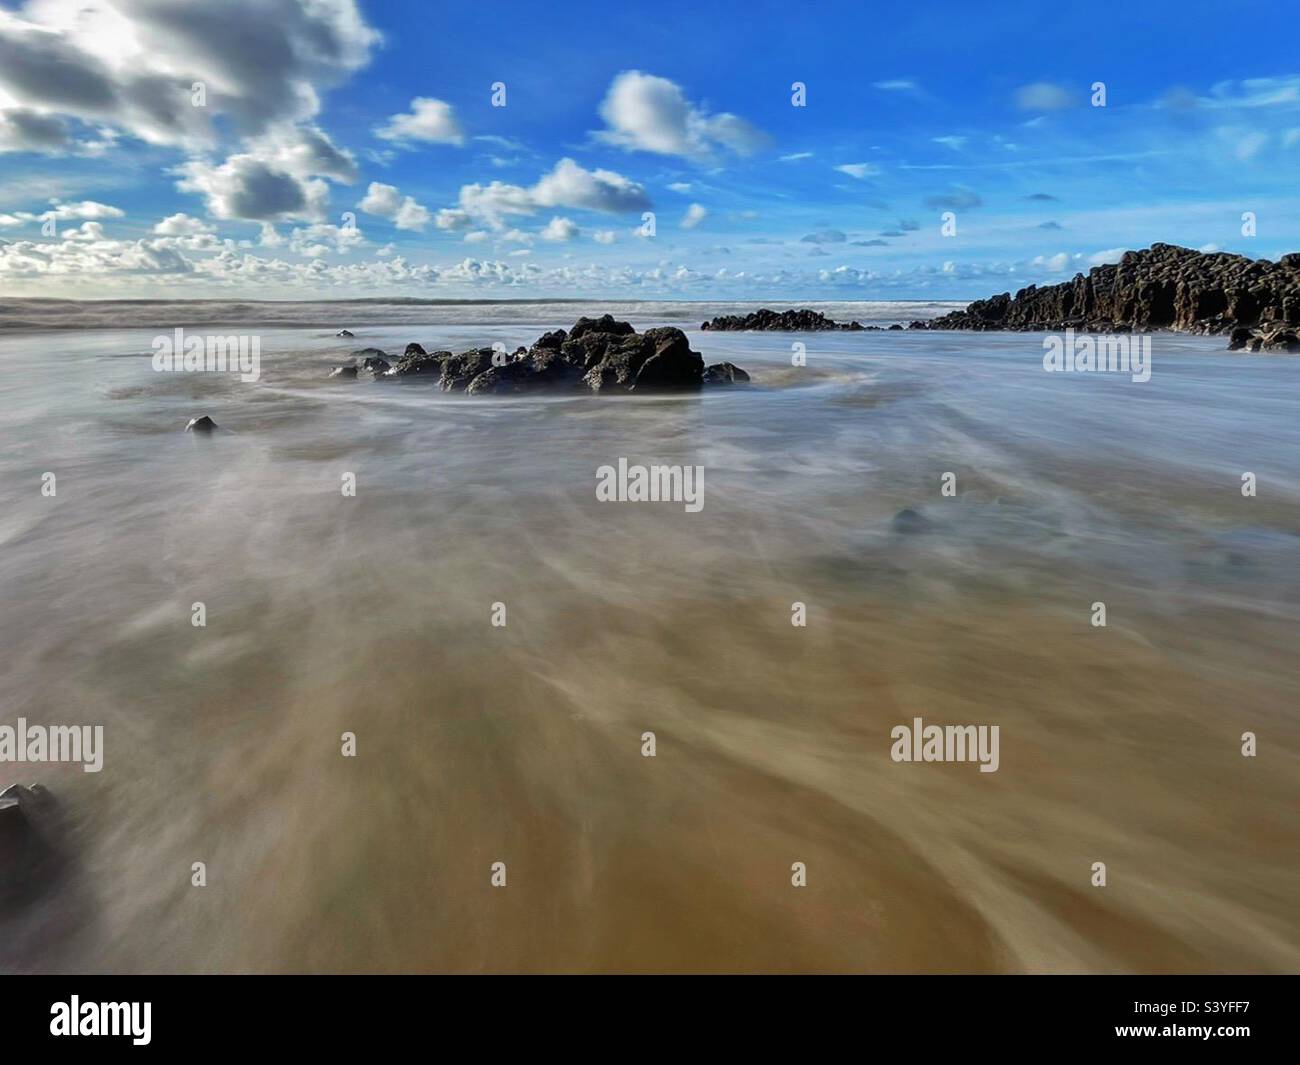 Mewslade Beach, Gower, Swansea, Wales. Ankommende Flut. Stockfoto